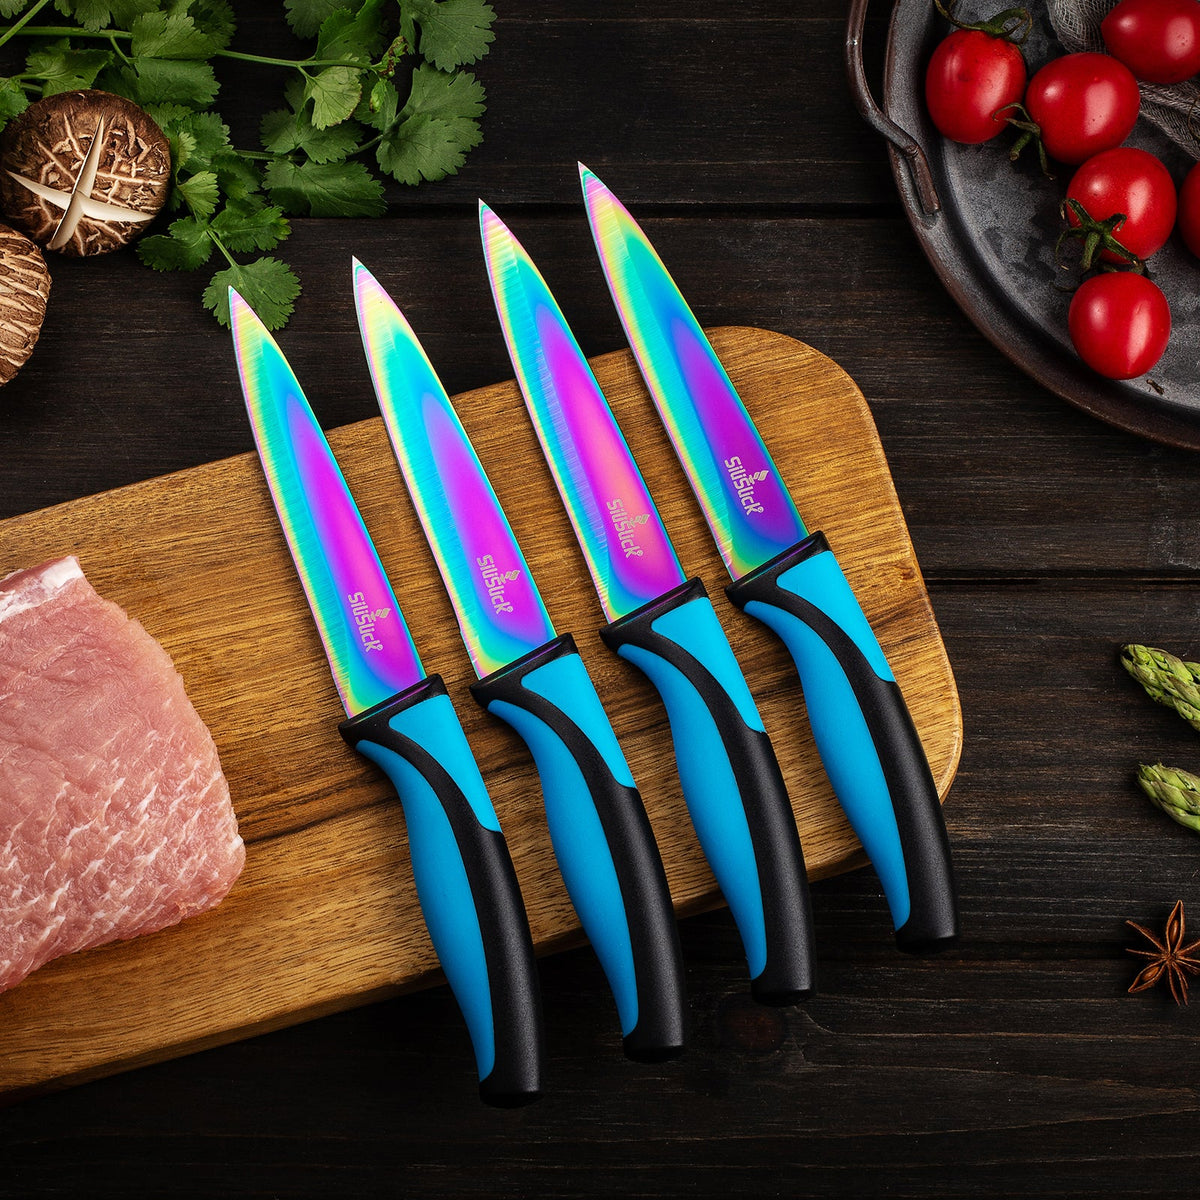 SiliSlick 4 Piece Blue Steak Knife Set - Stainless Steel Blades